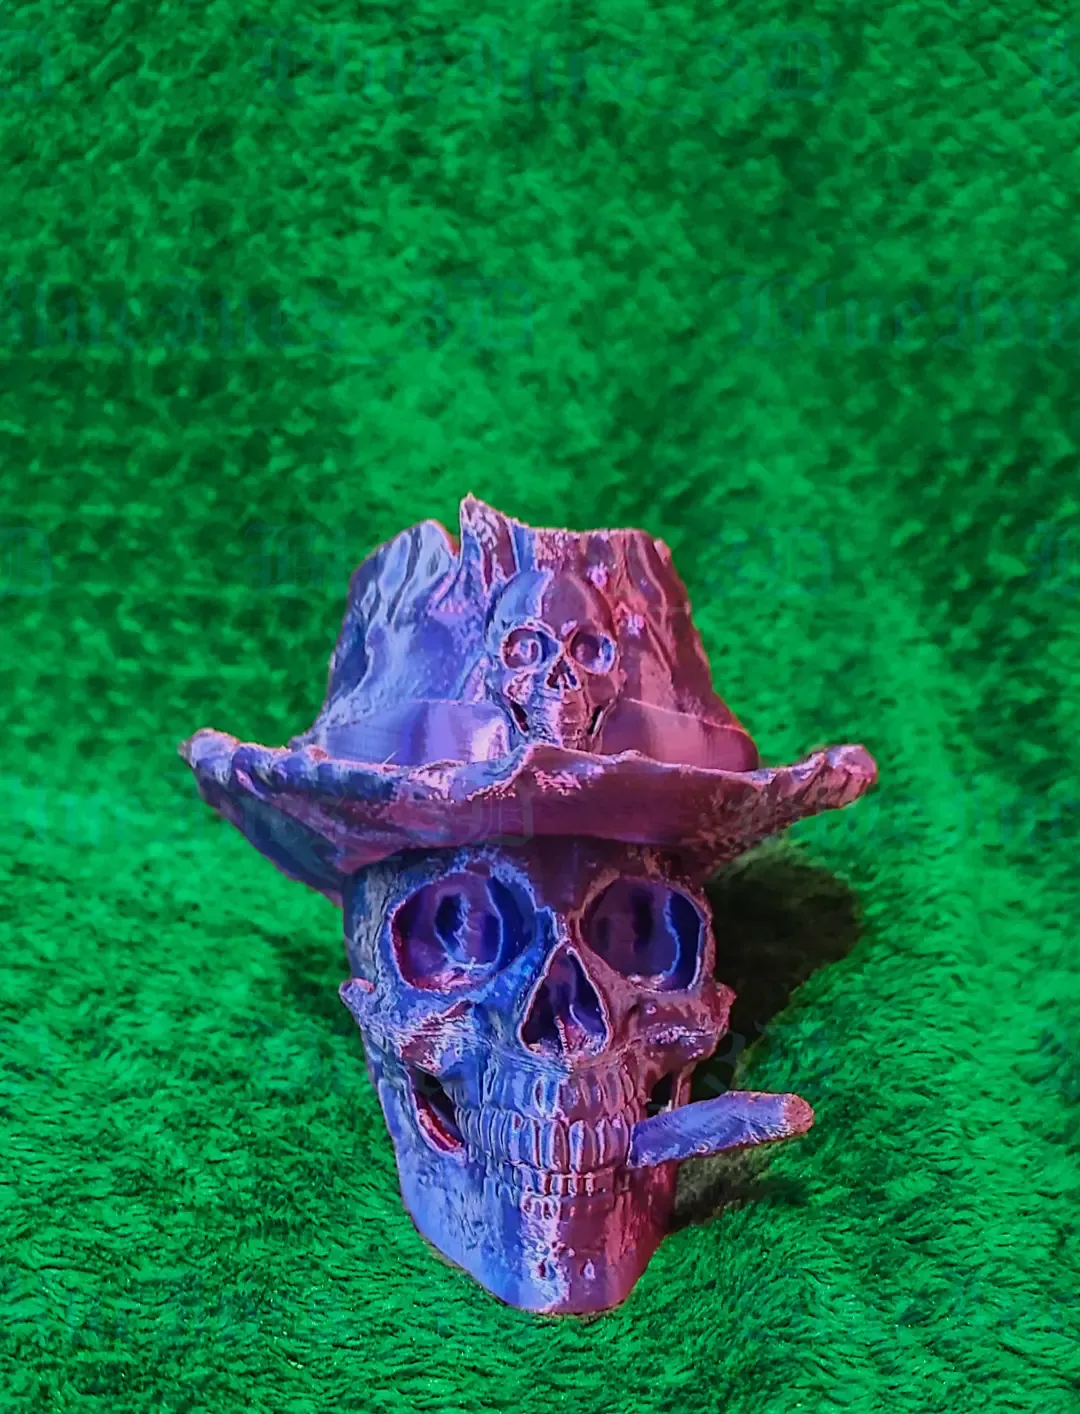 Cowboy skull with cigar